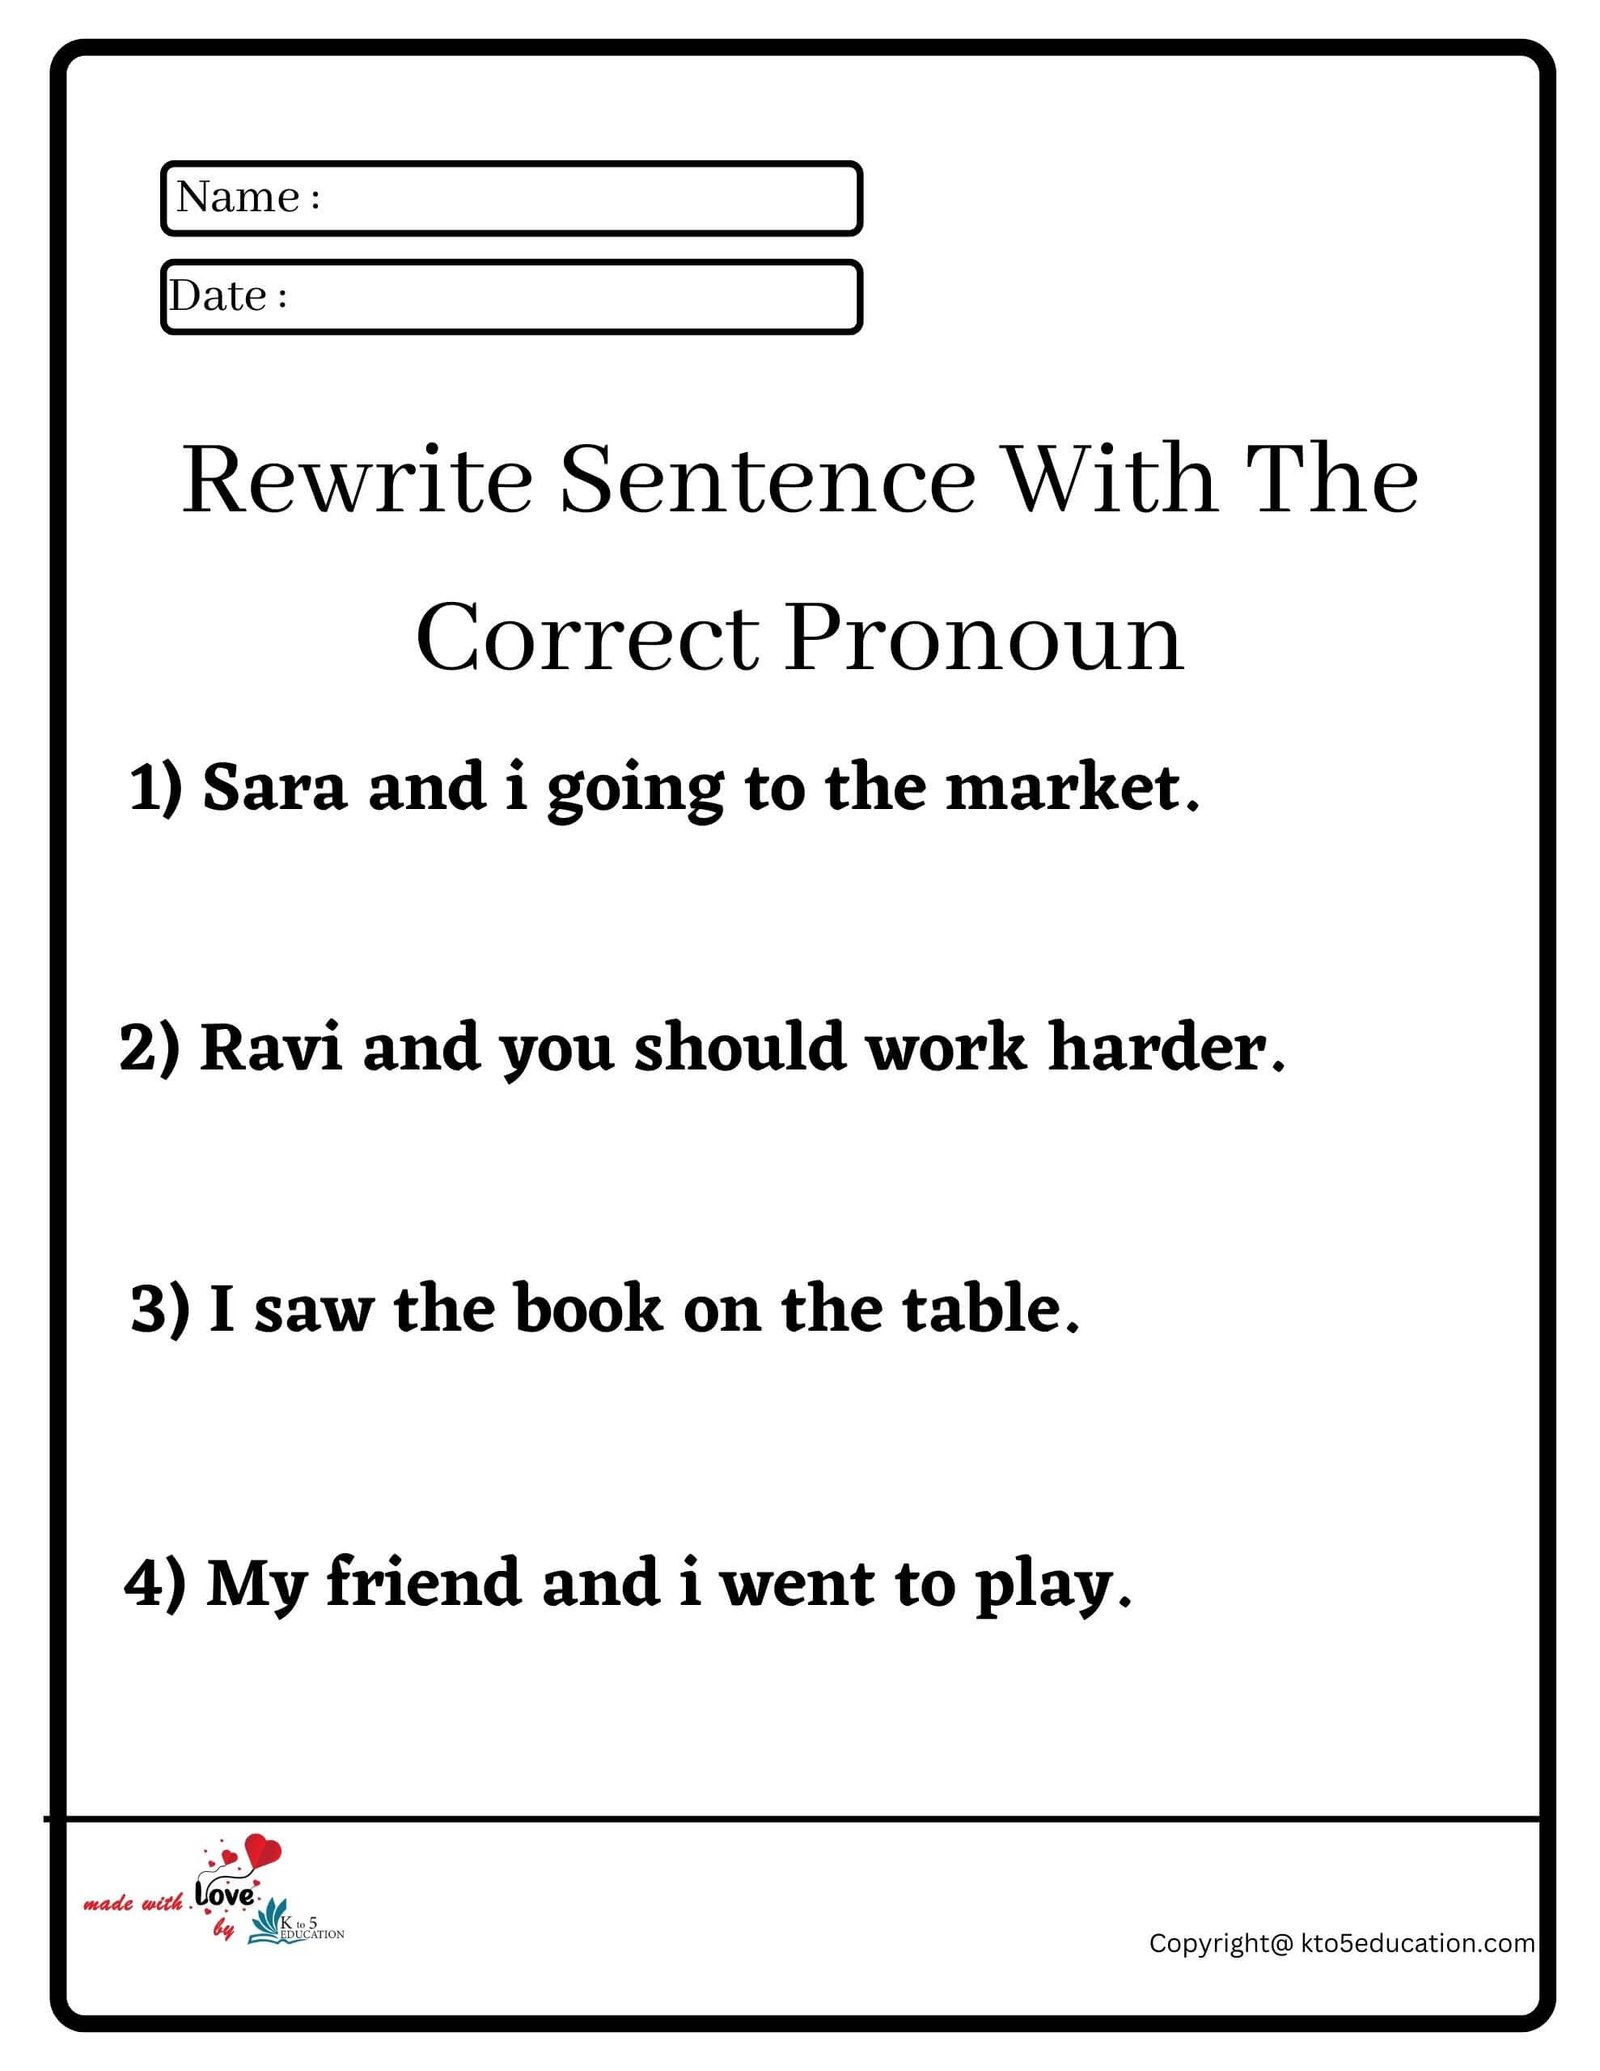 Rewrite The Sentence Worksheet For Class 2